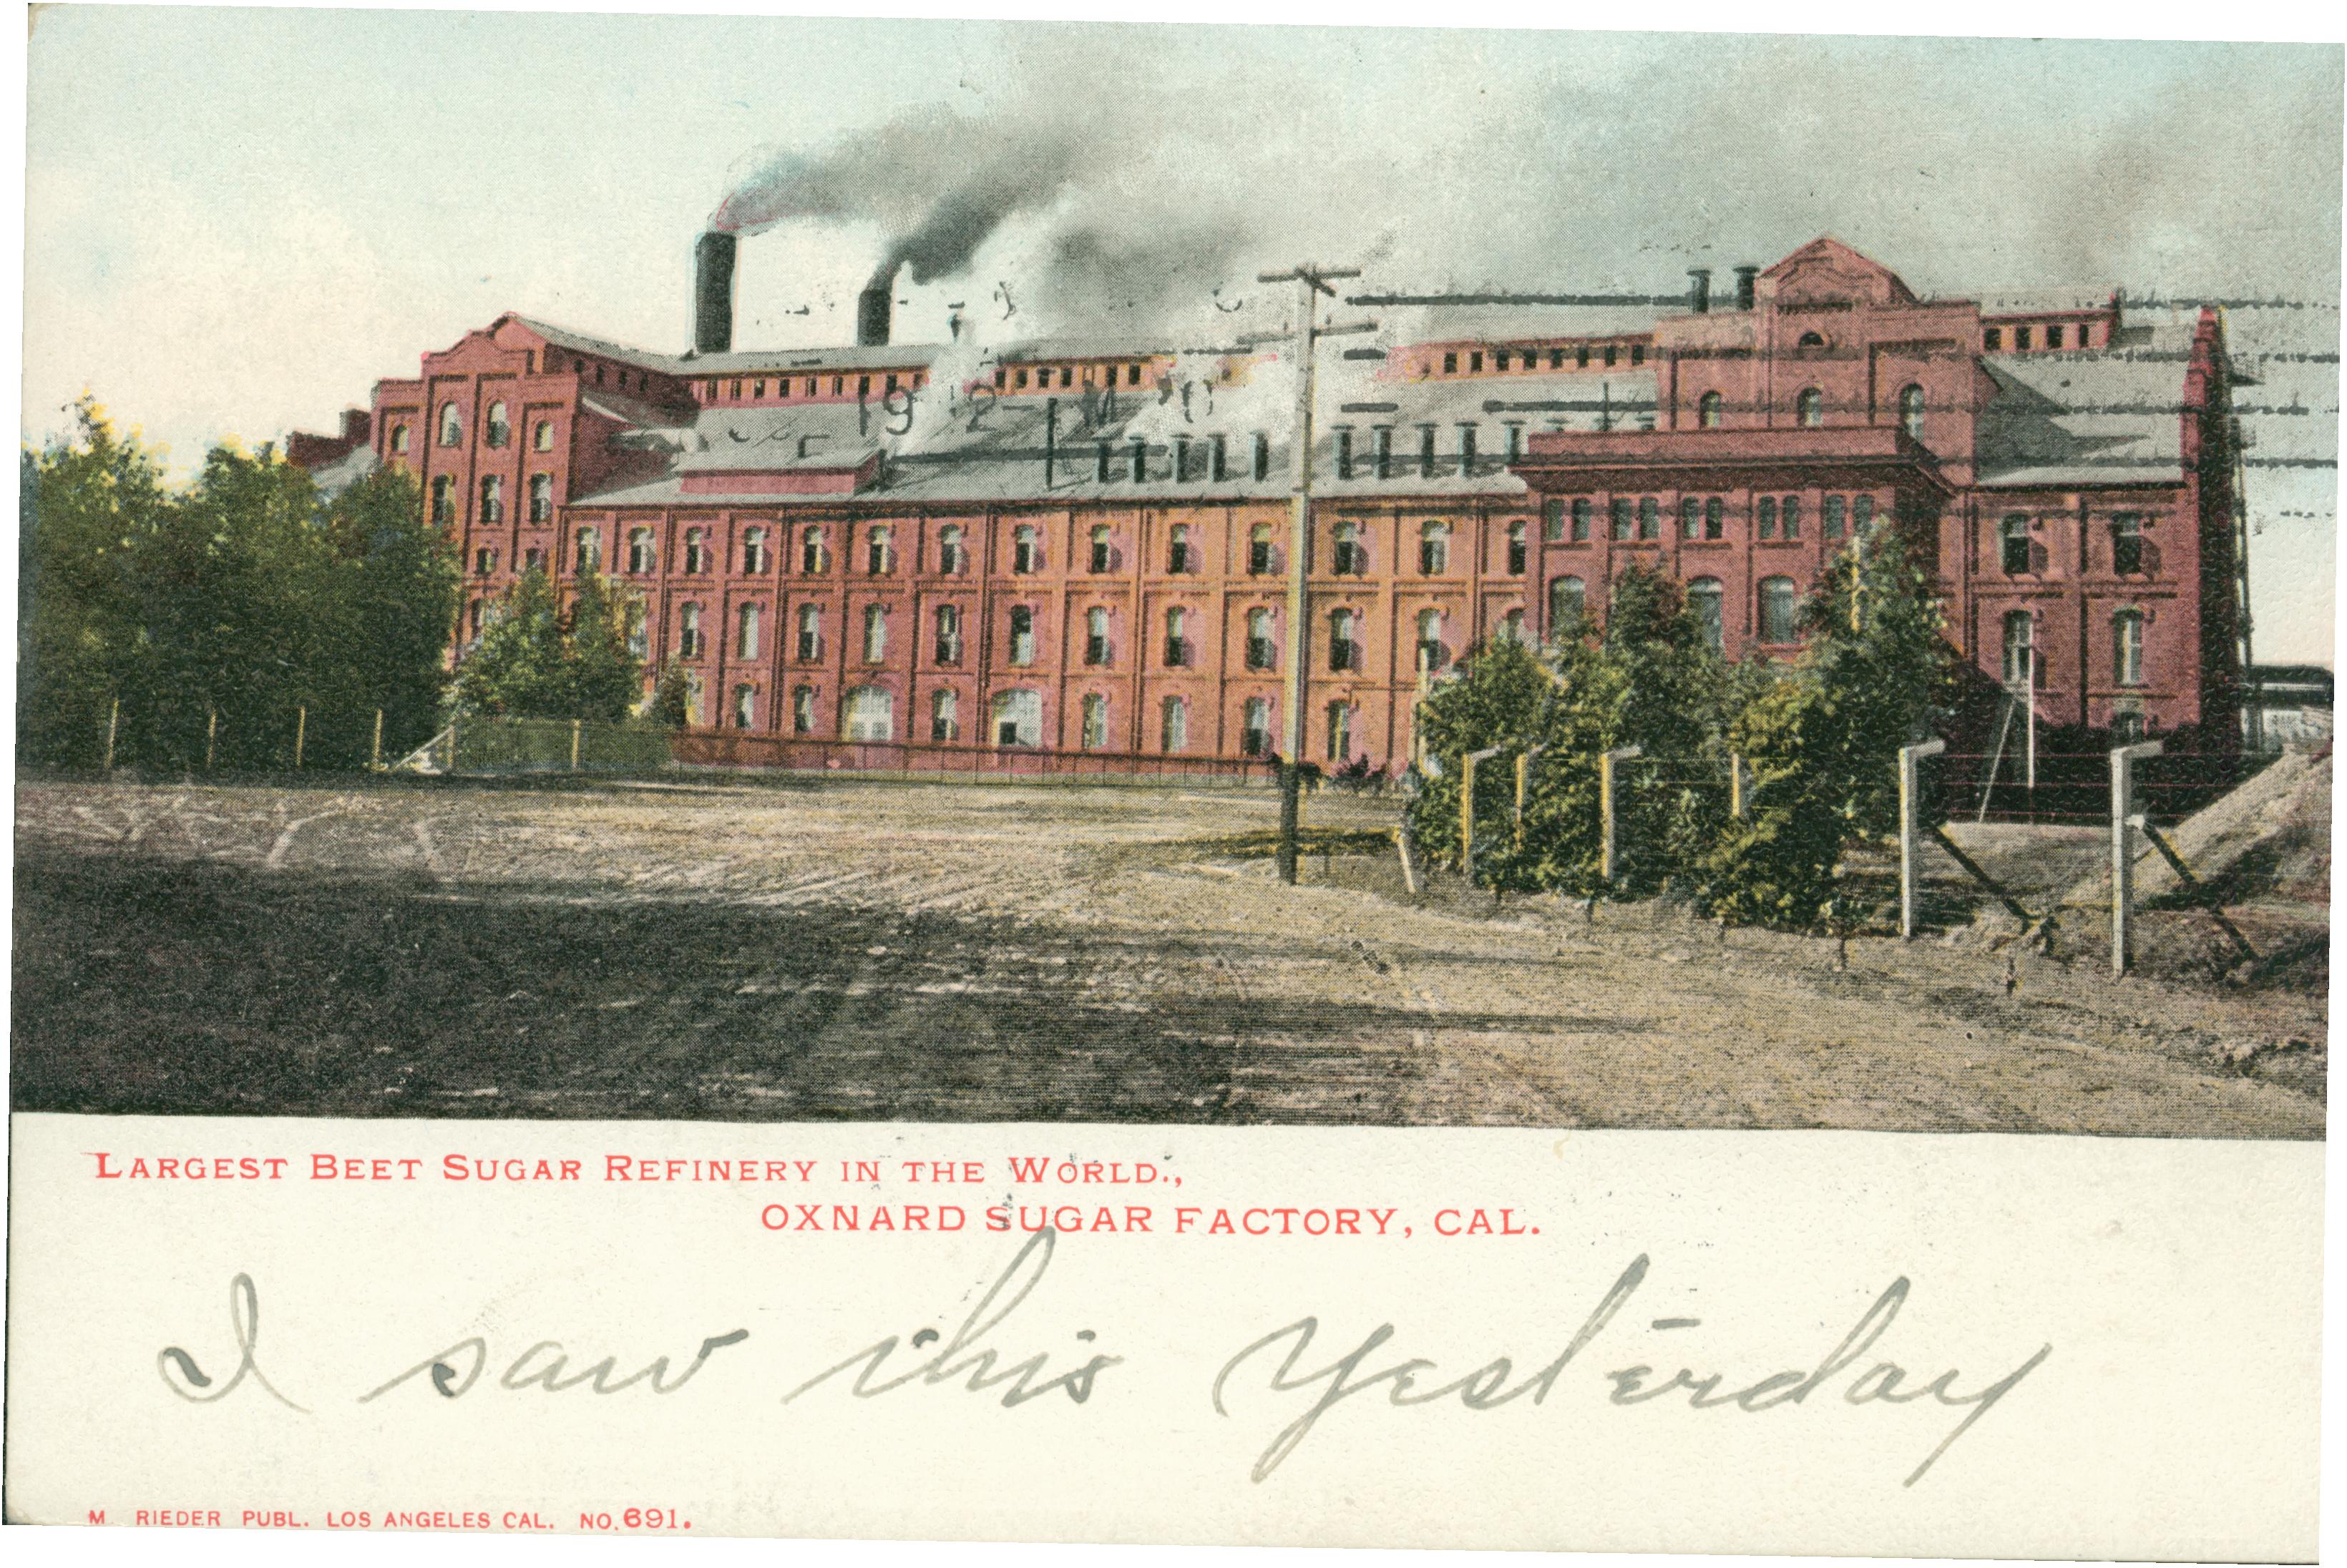 Shows the exterior of the Oxnard Sugar Factory